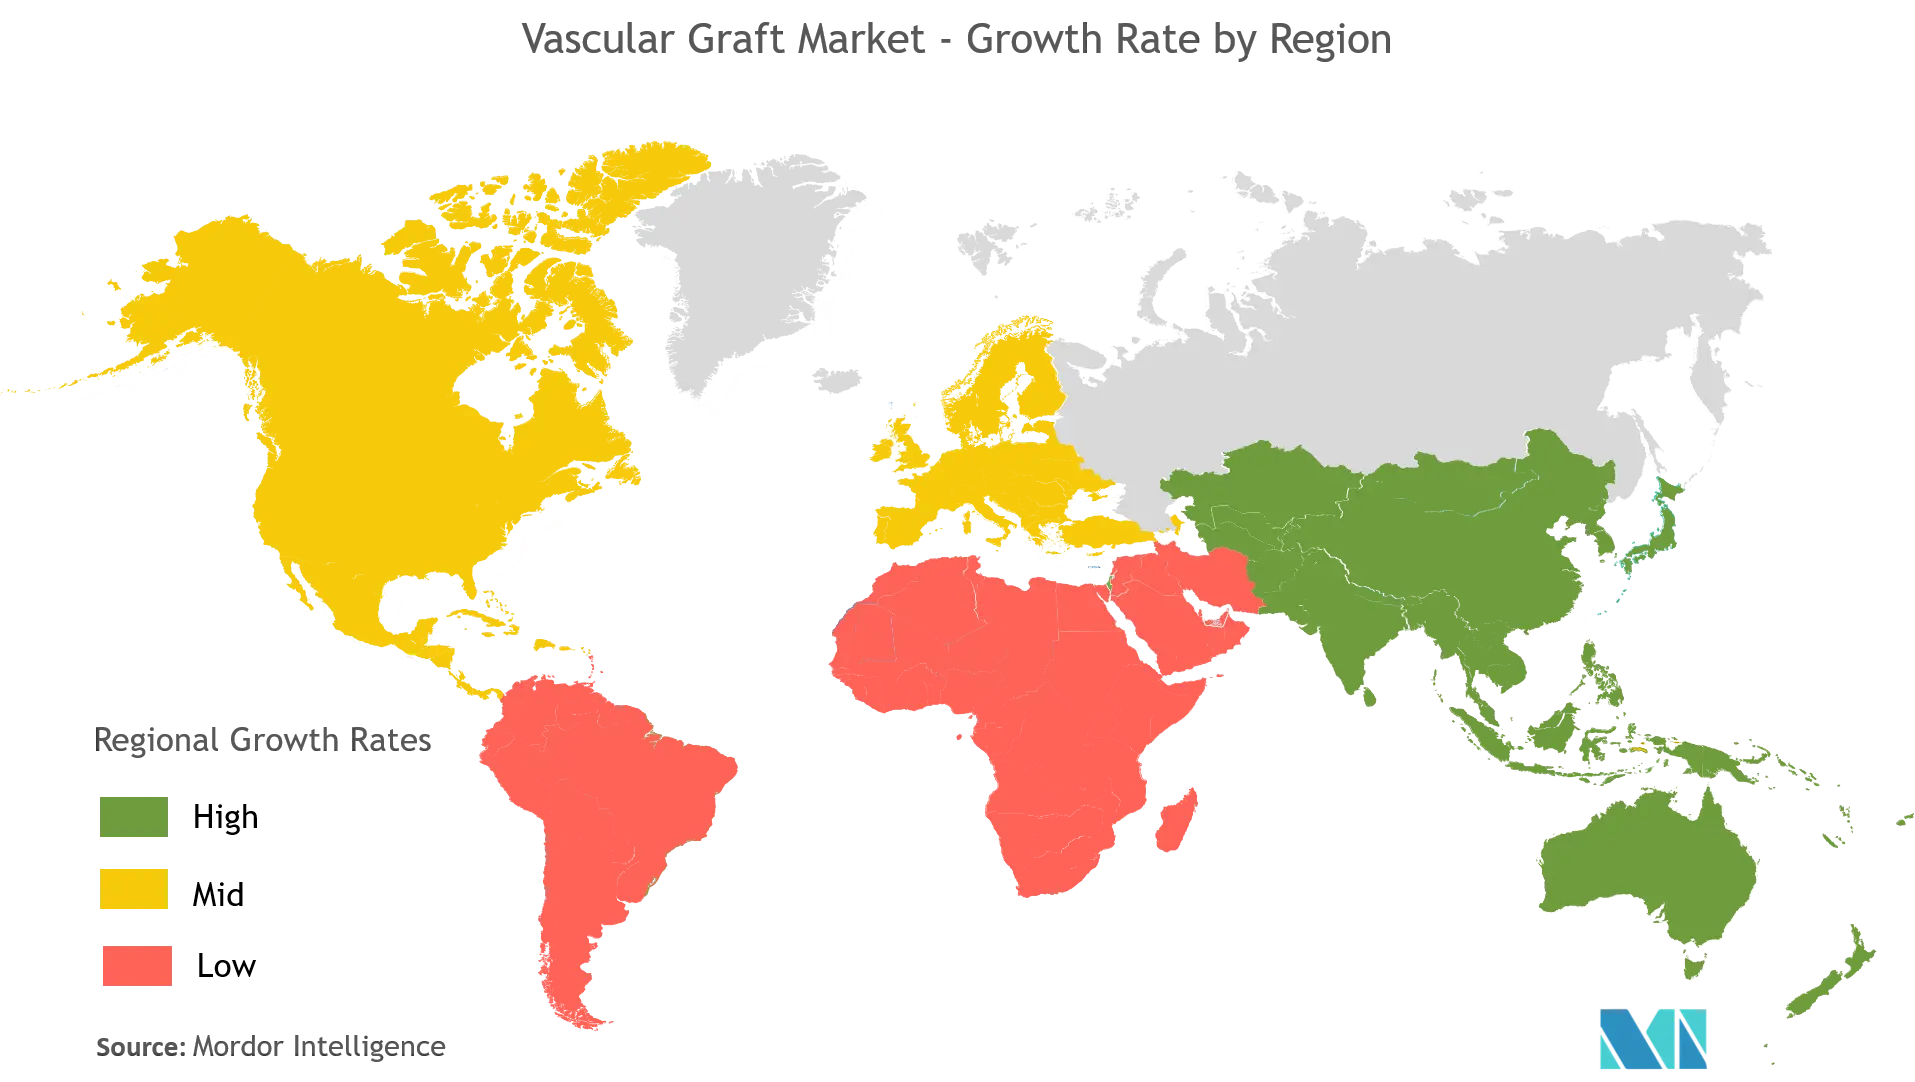  Vascular Graft Market Growth by Region